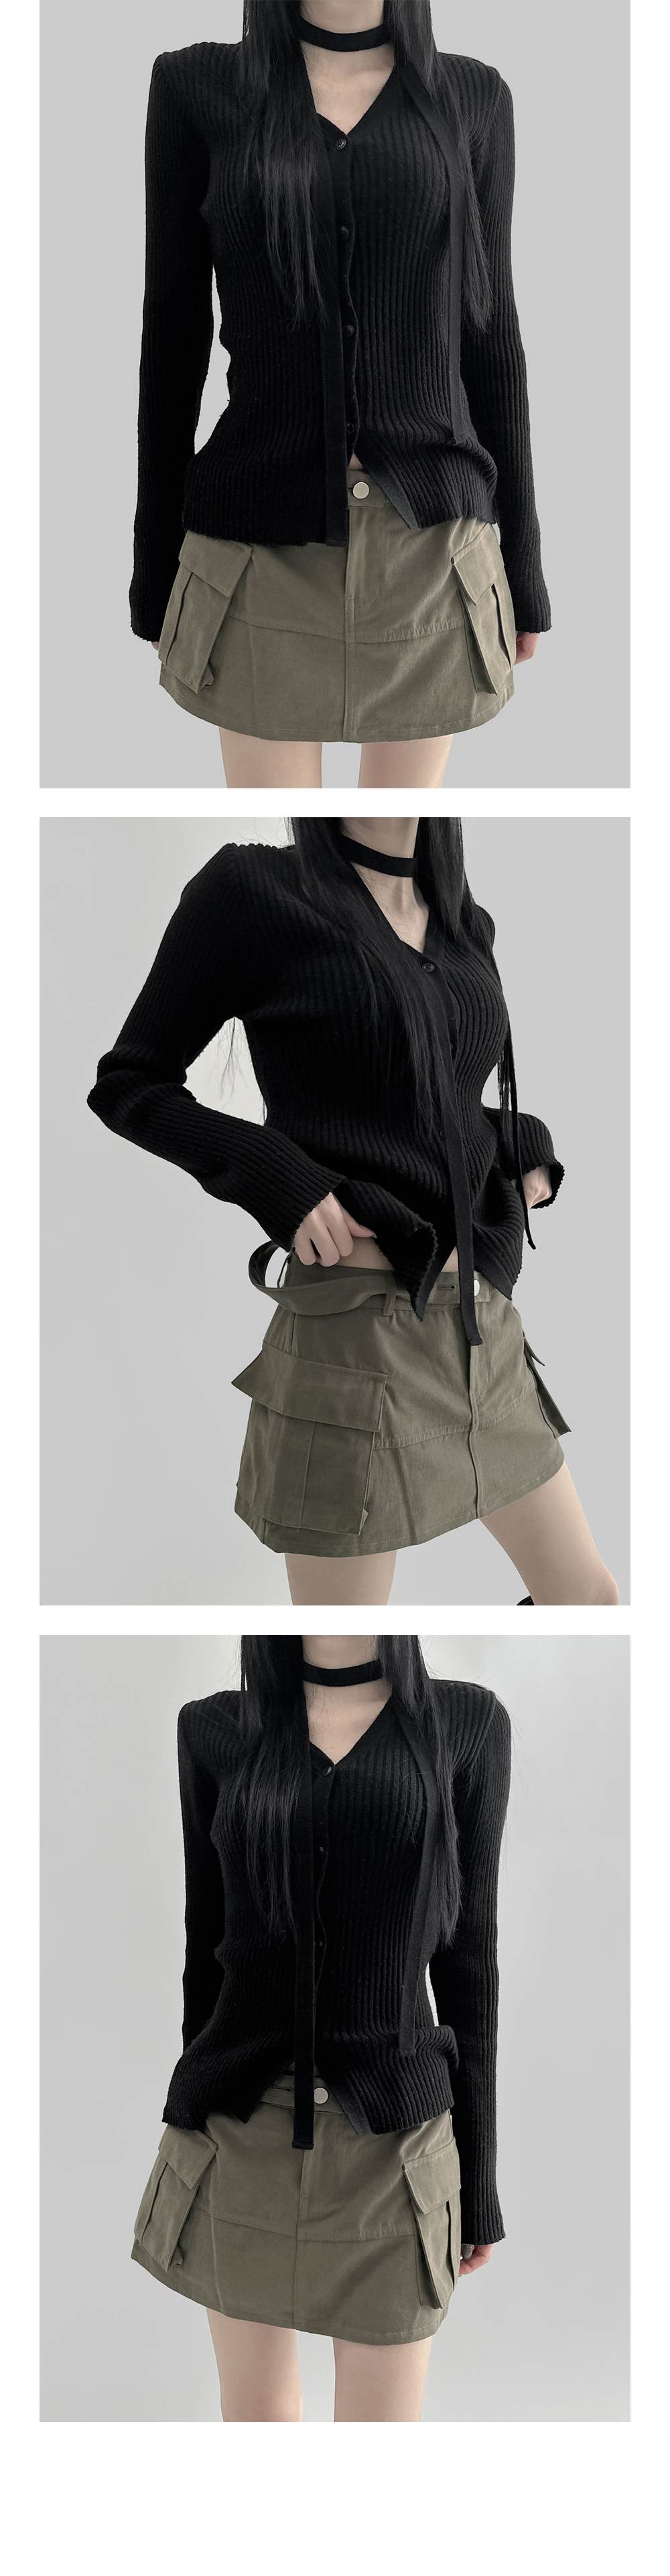 mini skirt oatmeal color image-S1L12